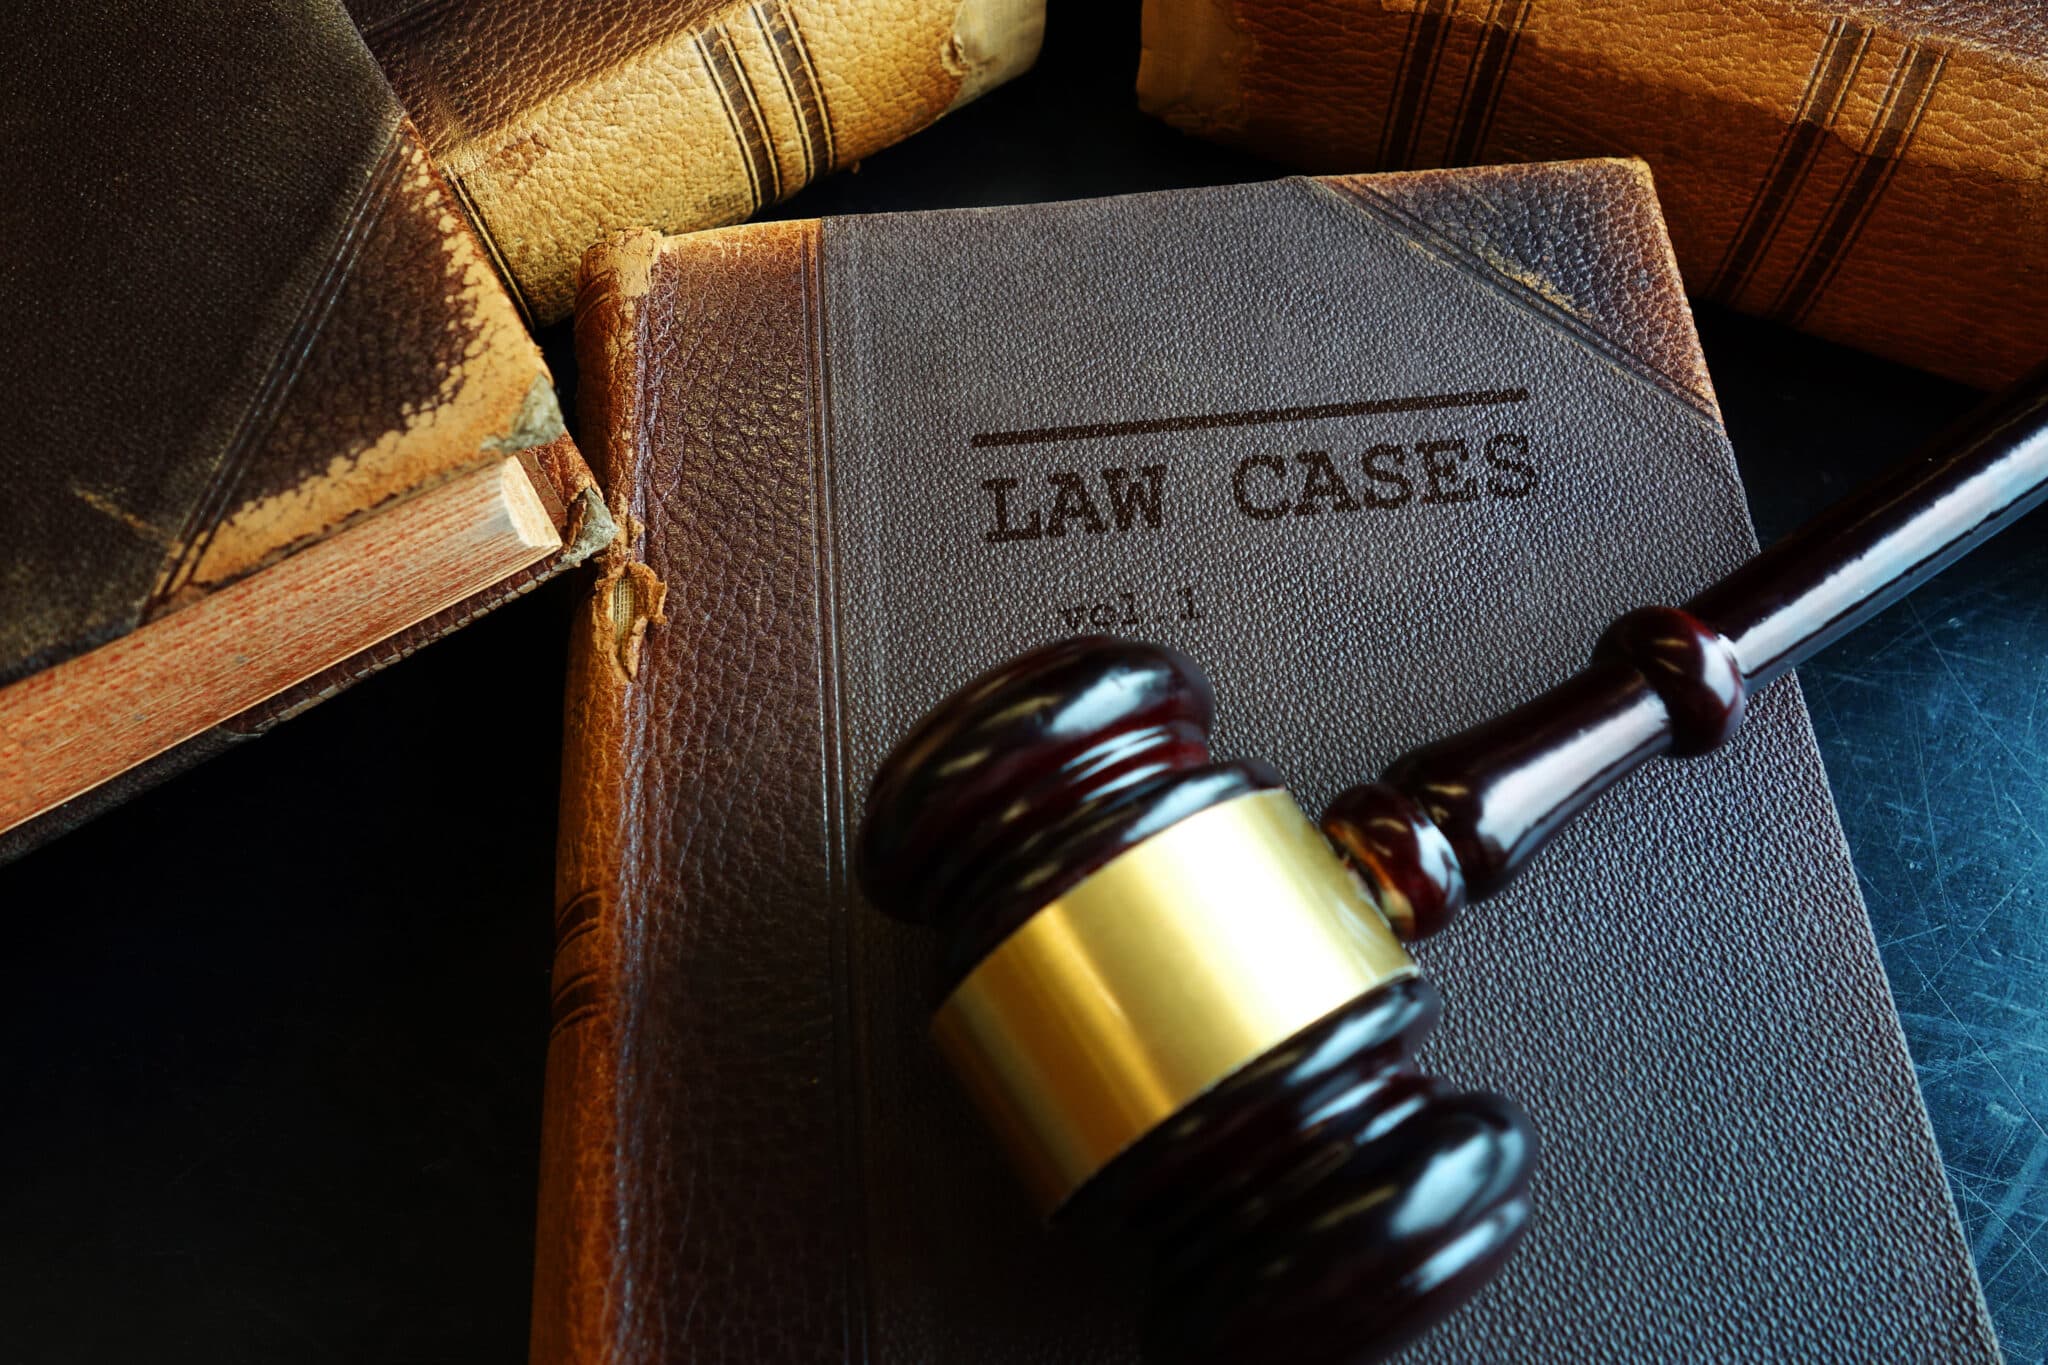 Gavel on top of law book for criminal defense appeals